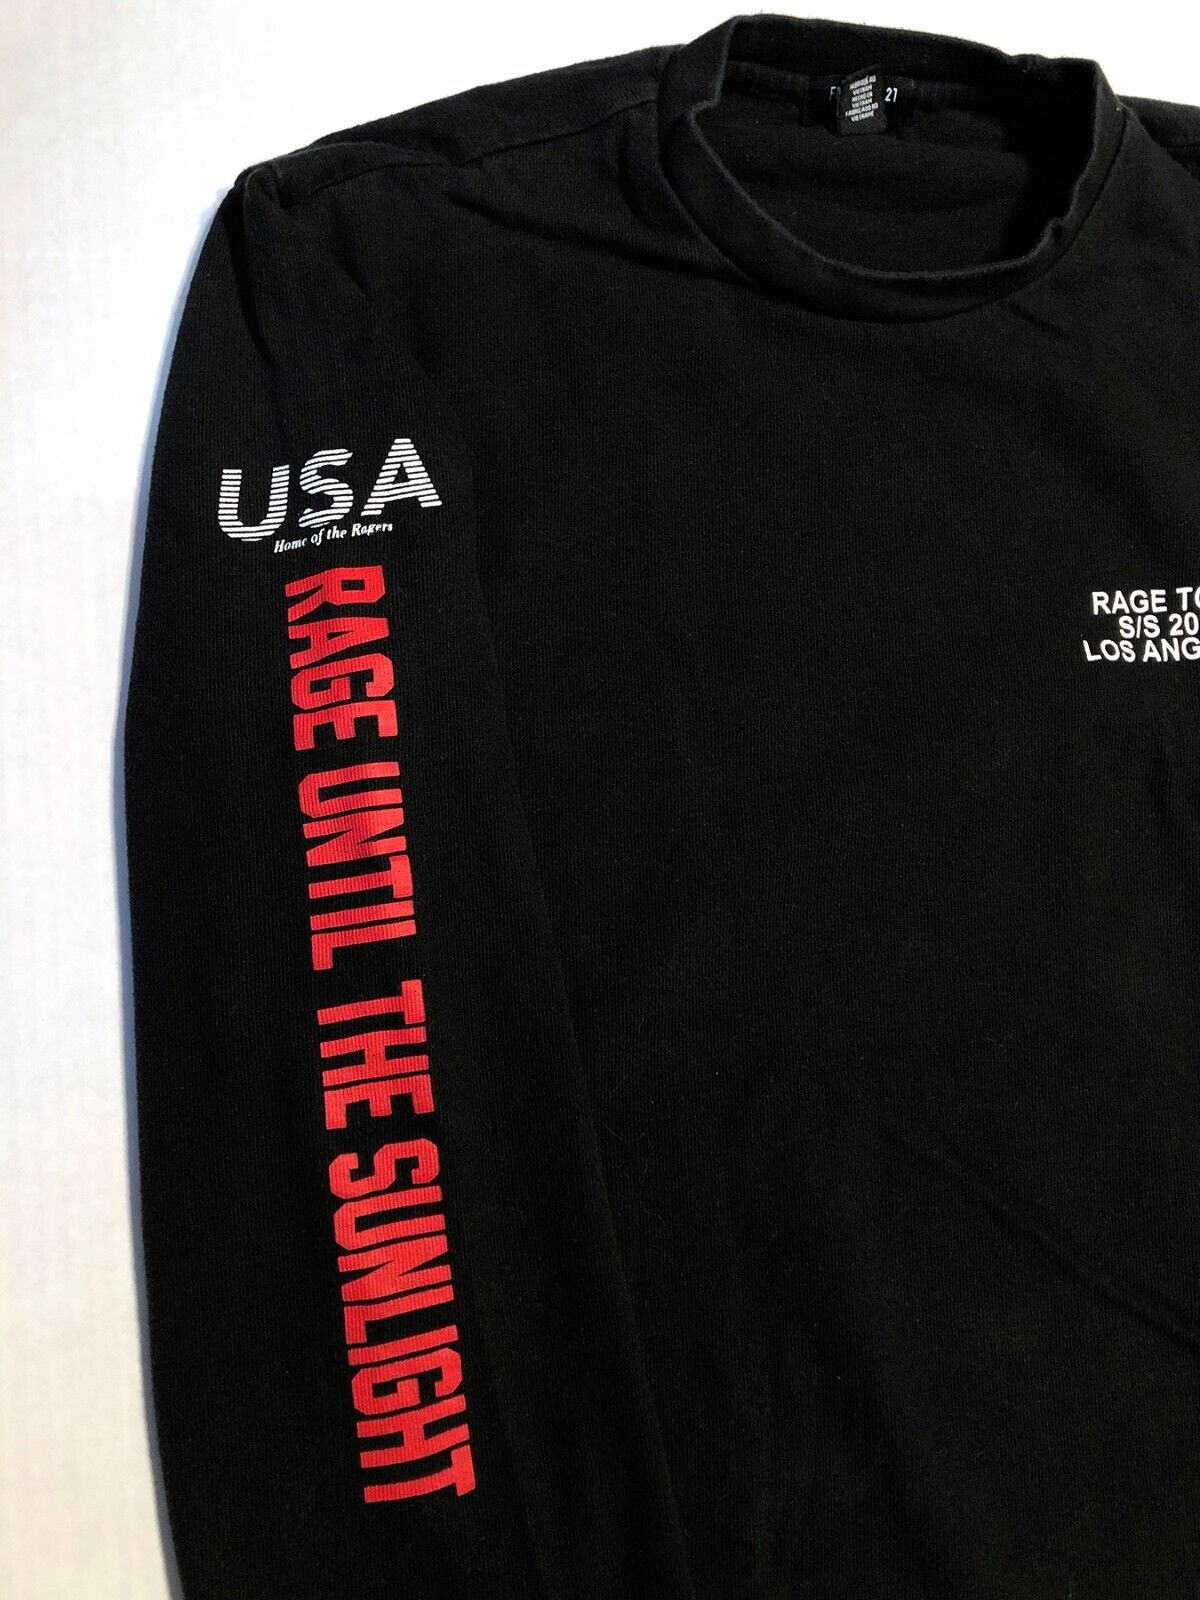 RAGE AGAINST THE MACHINE Men's Medium Longsleeve Black T-Shirt 2019 Los  Angeles